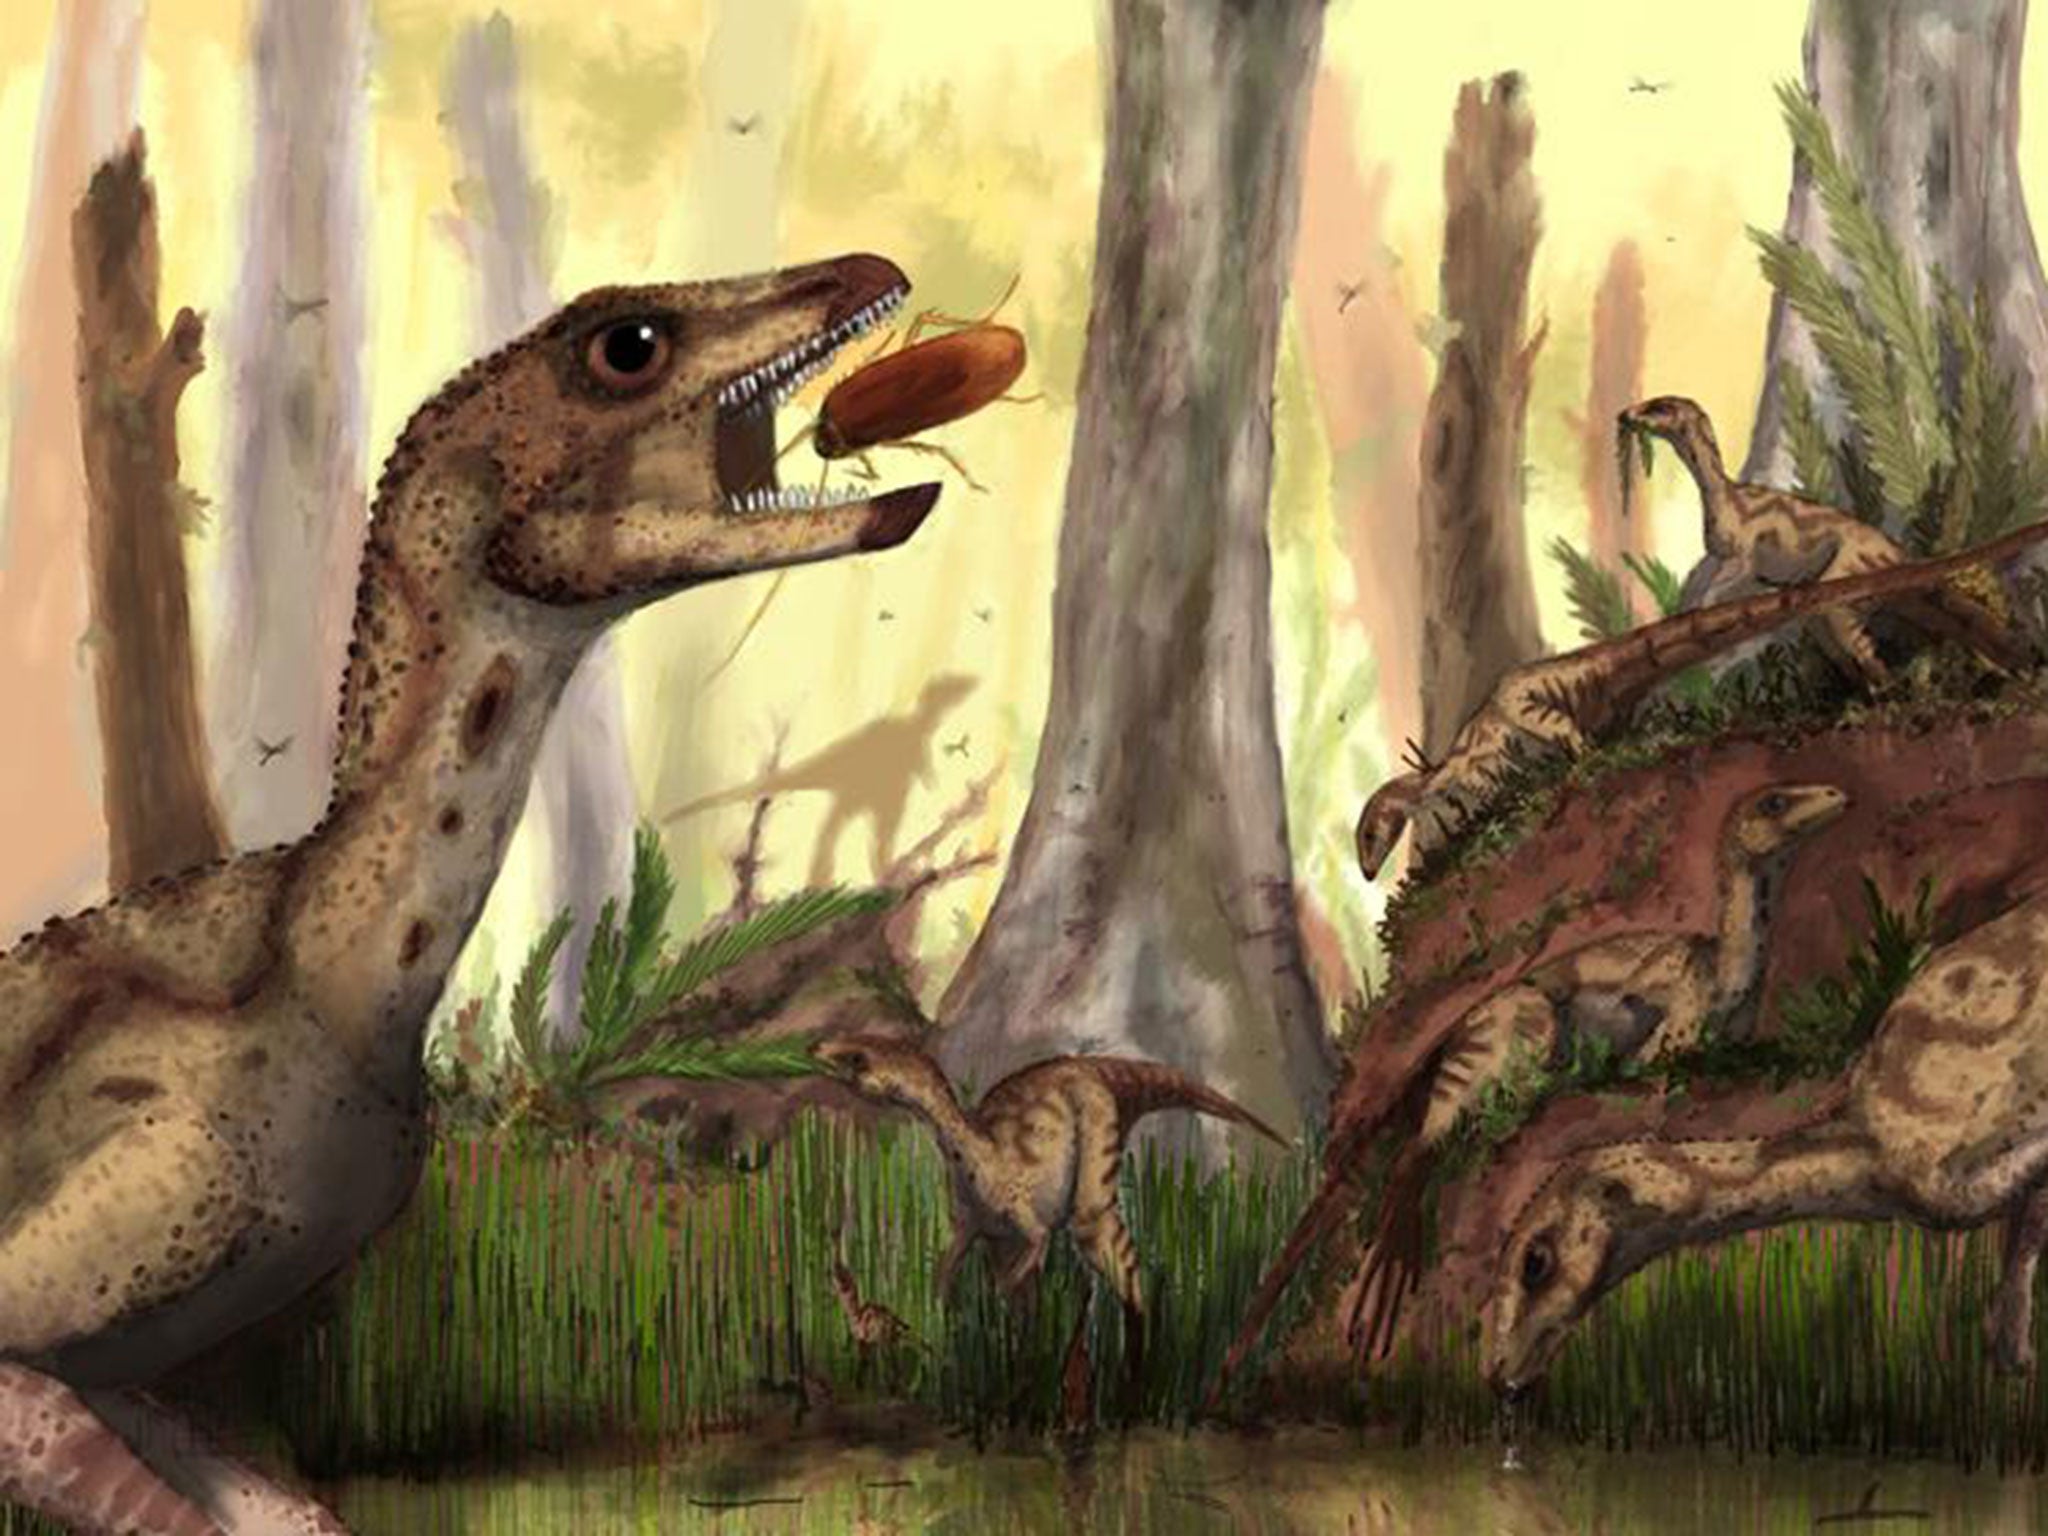 An artist's impression of the Laquintasaura dinosaur